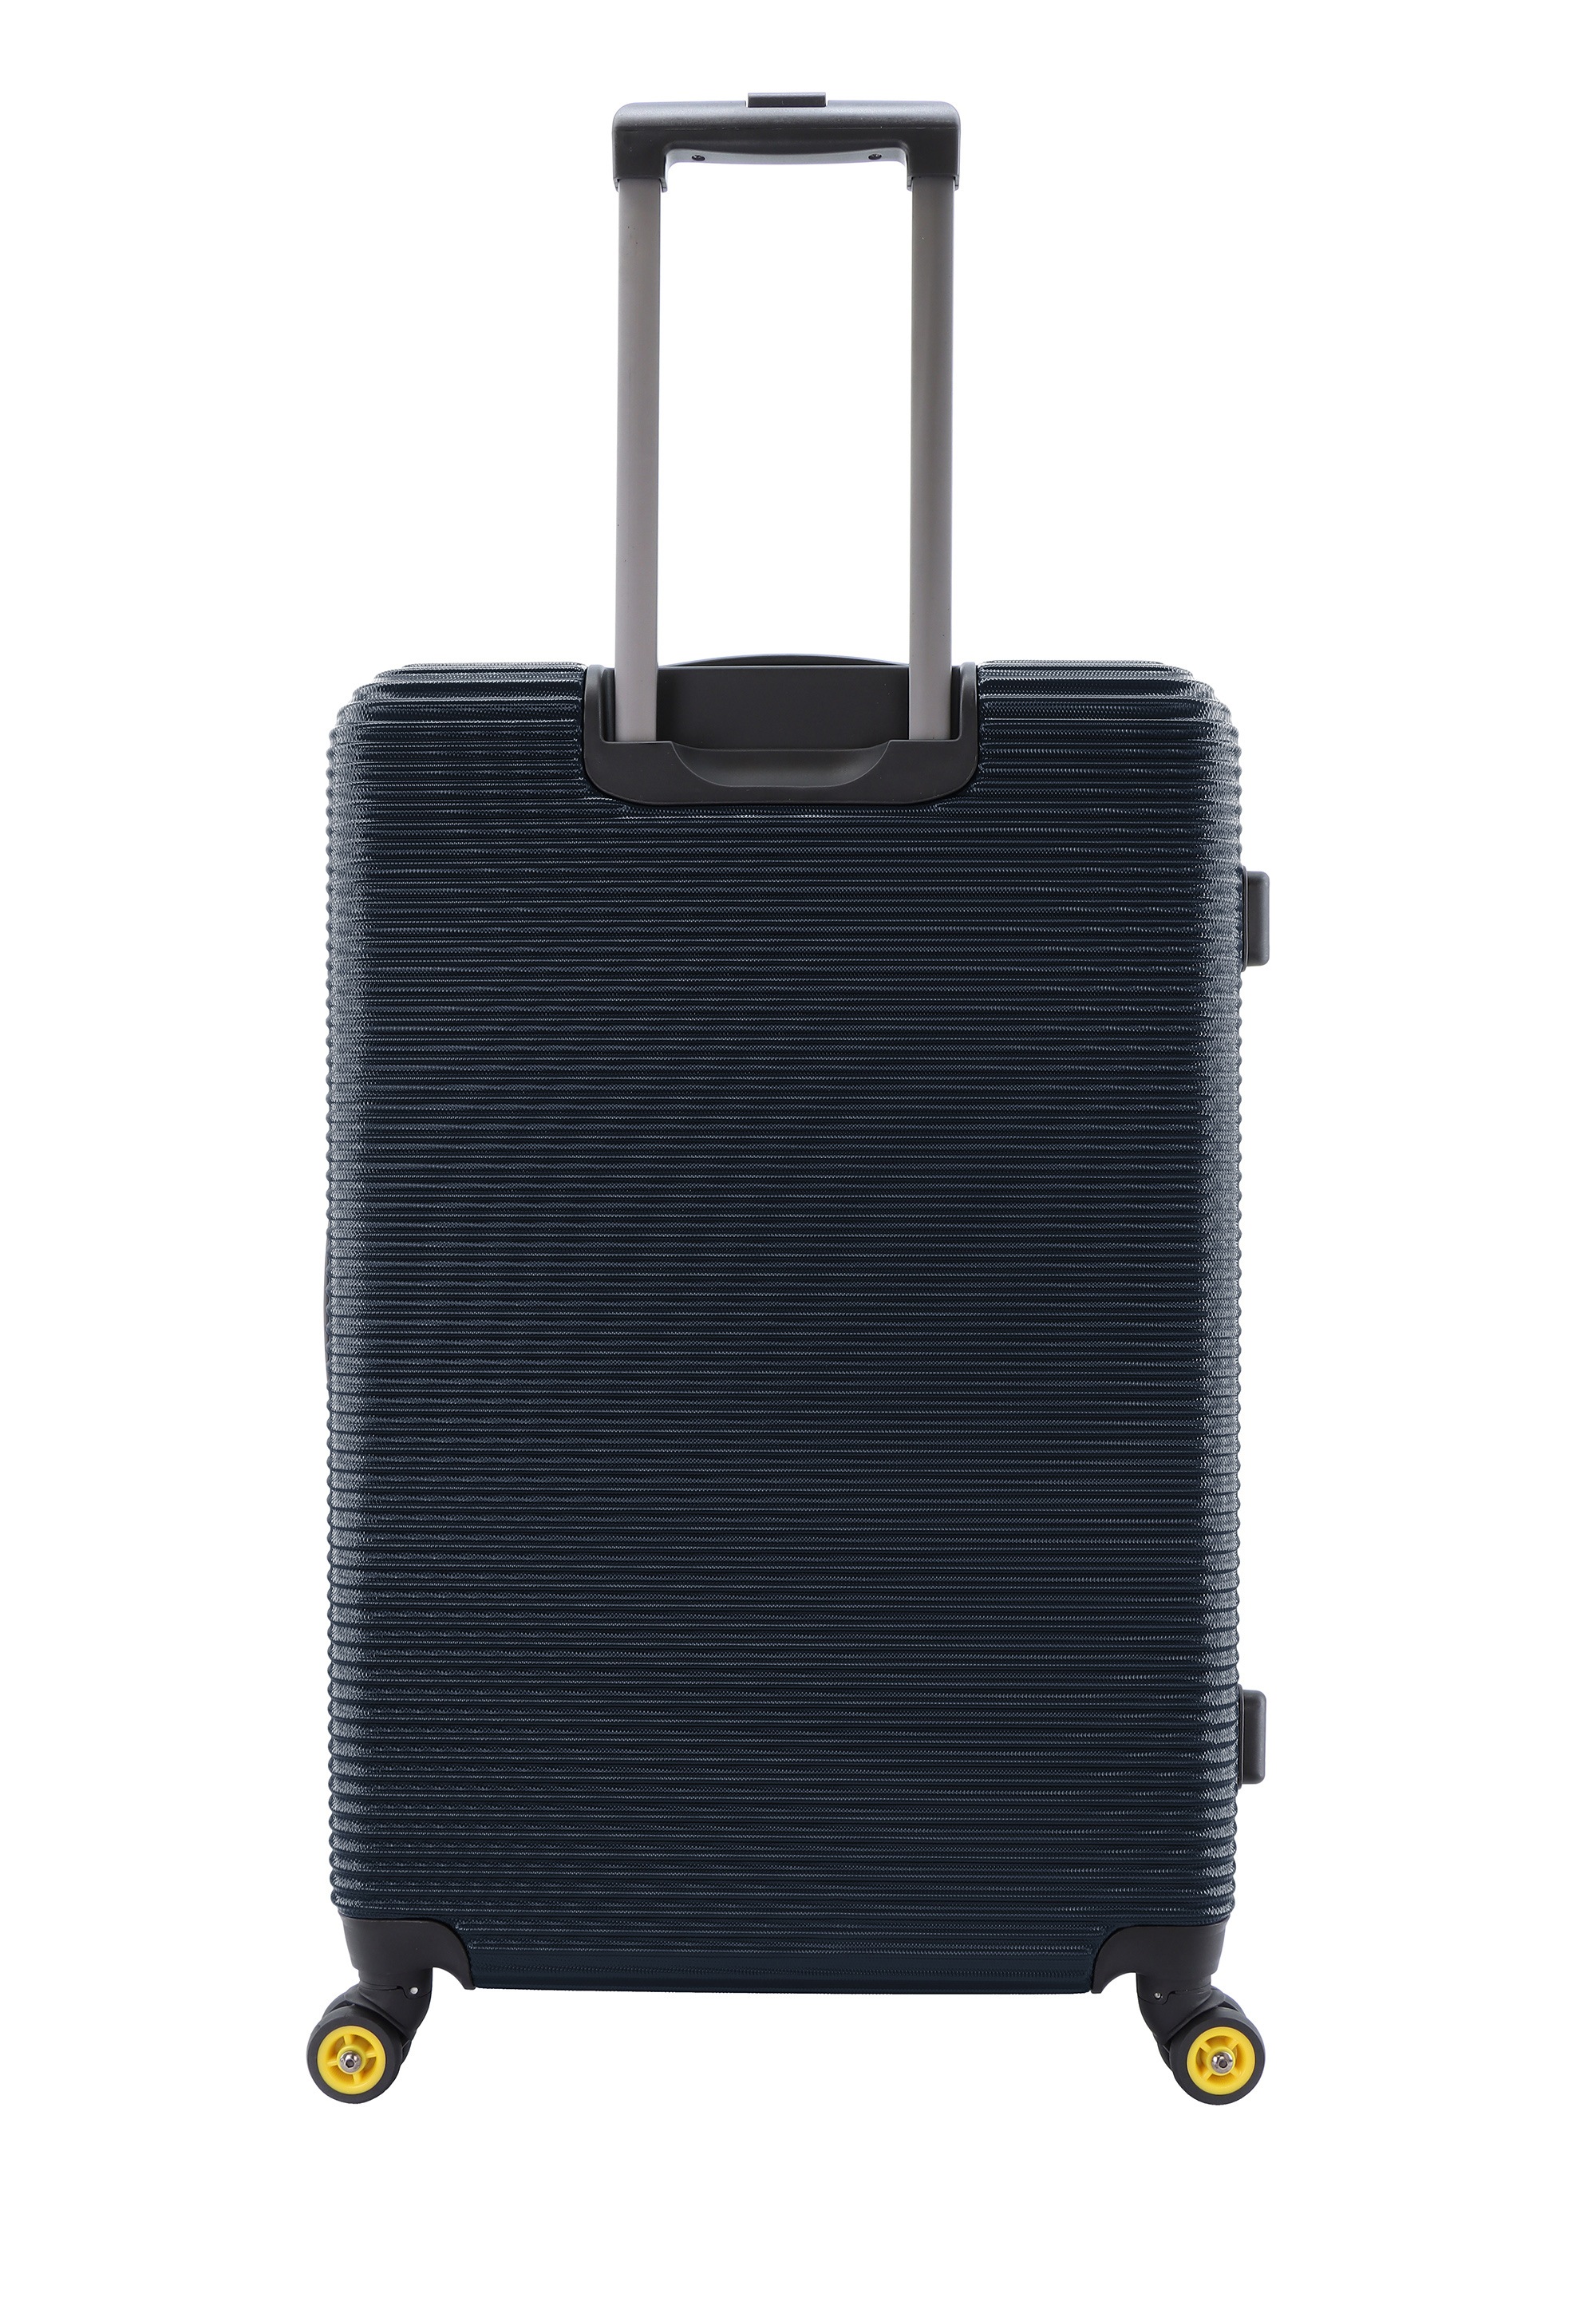 NATIONAL GEOGRAPHIC Koffer »Abroad«, mit praktischem TSA-Zahlenschloss